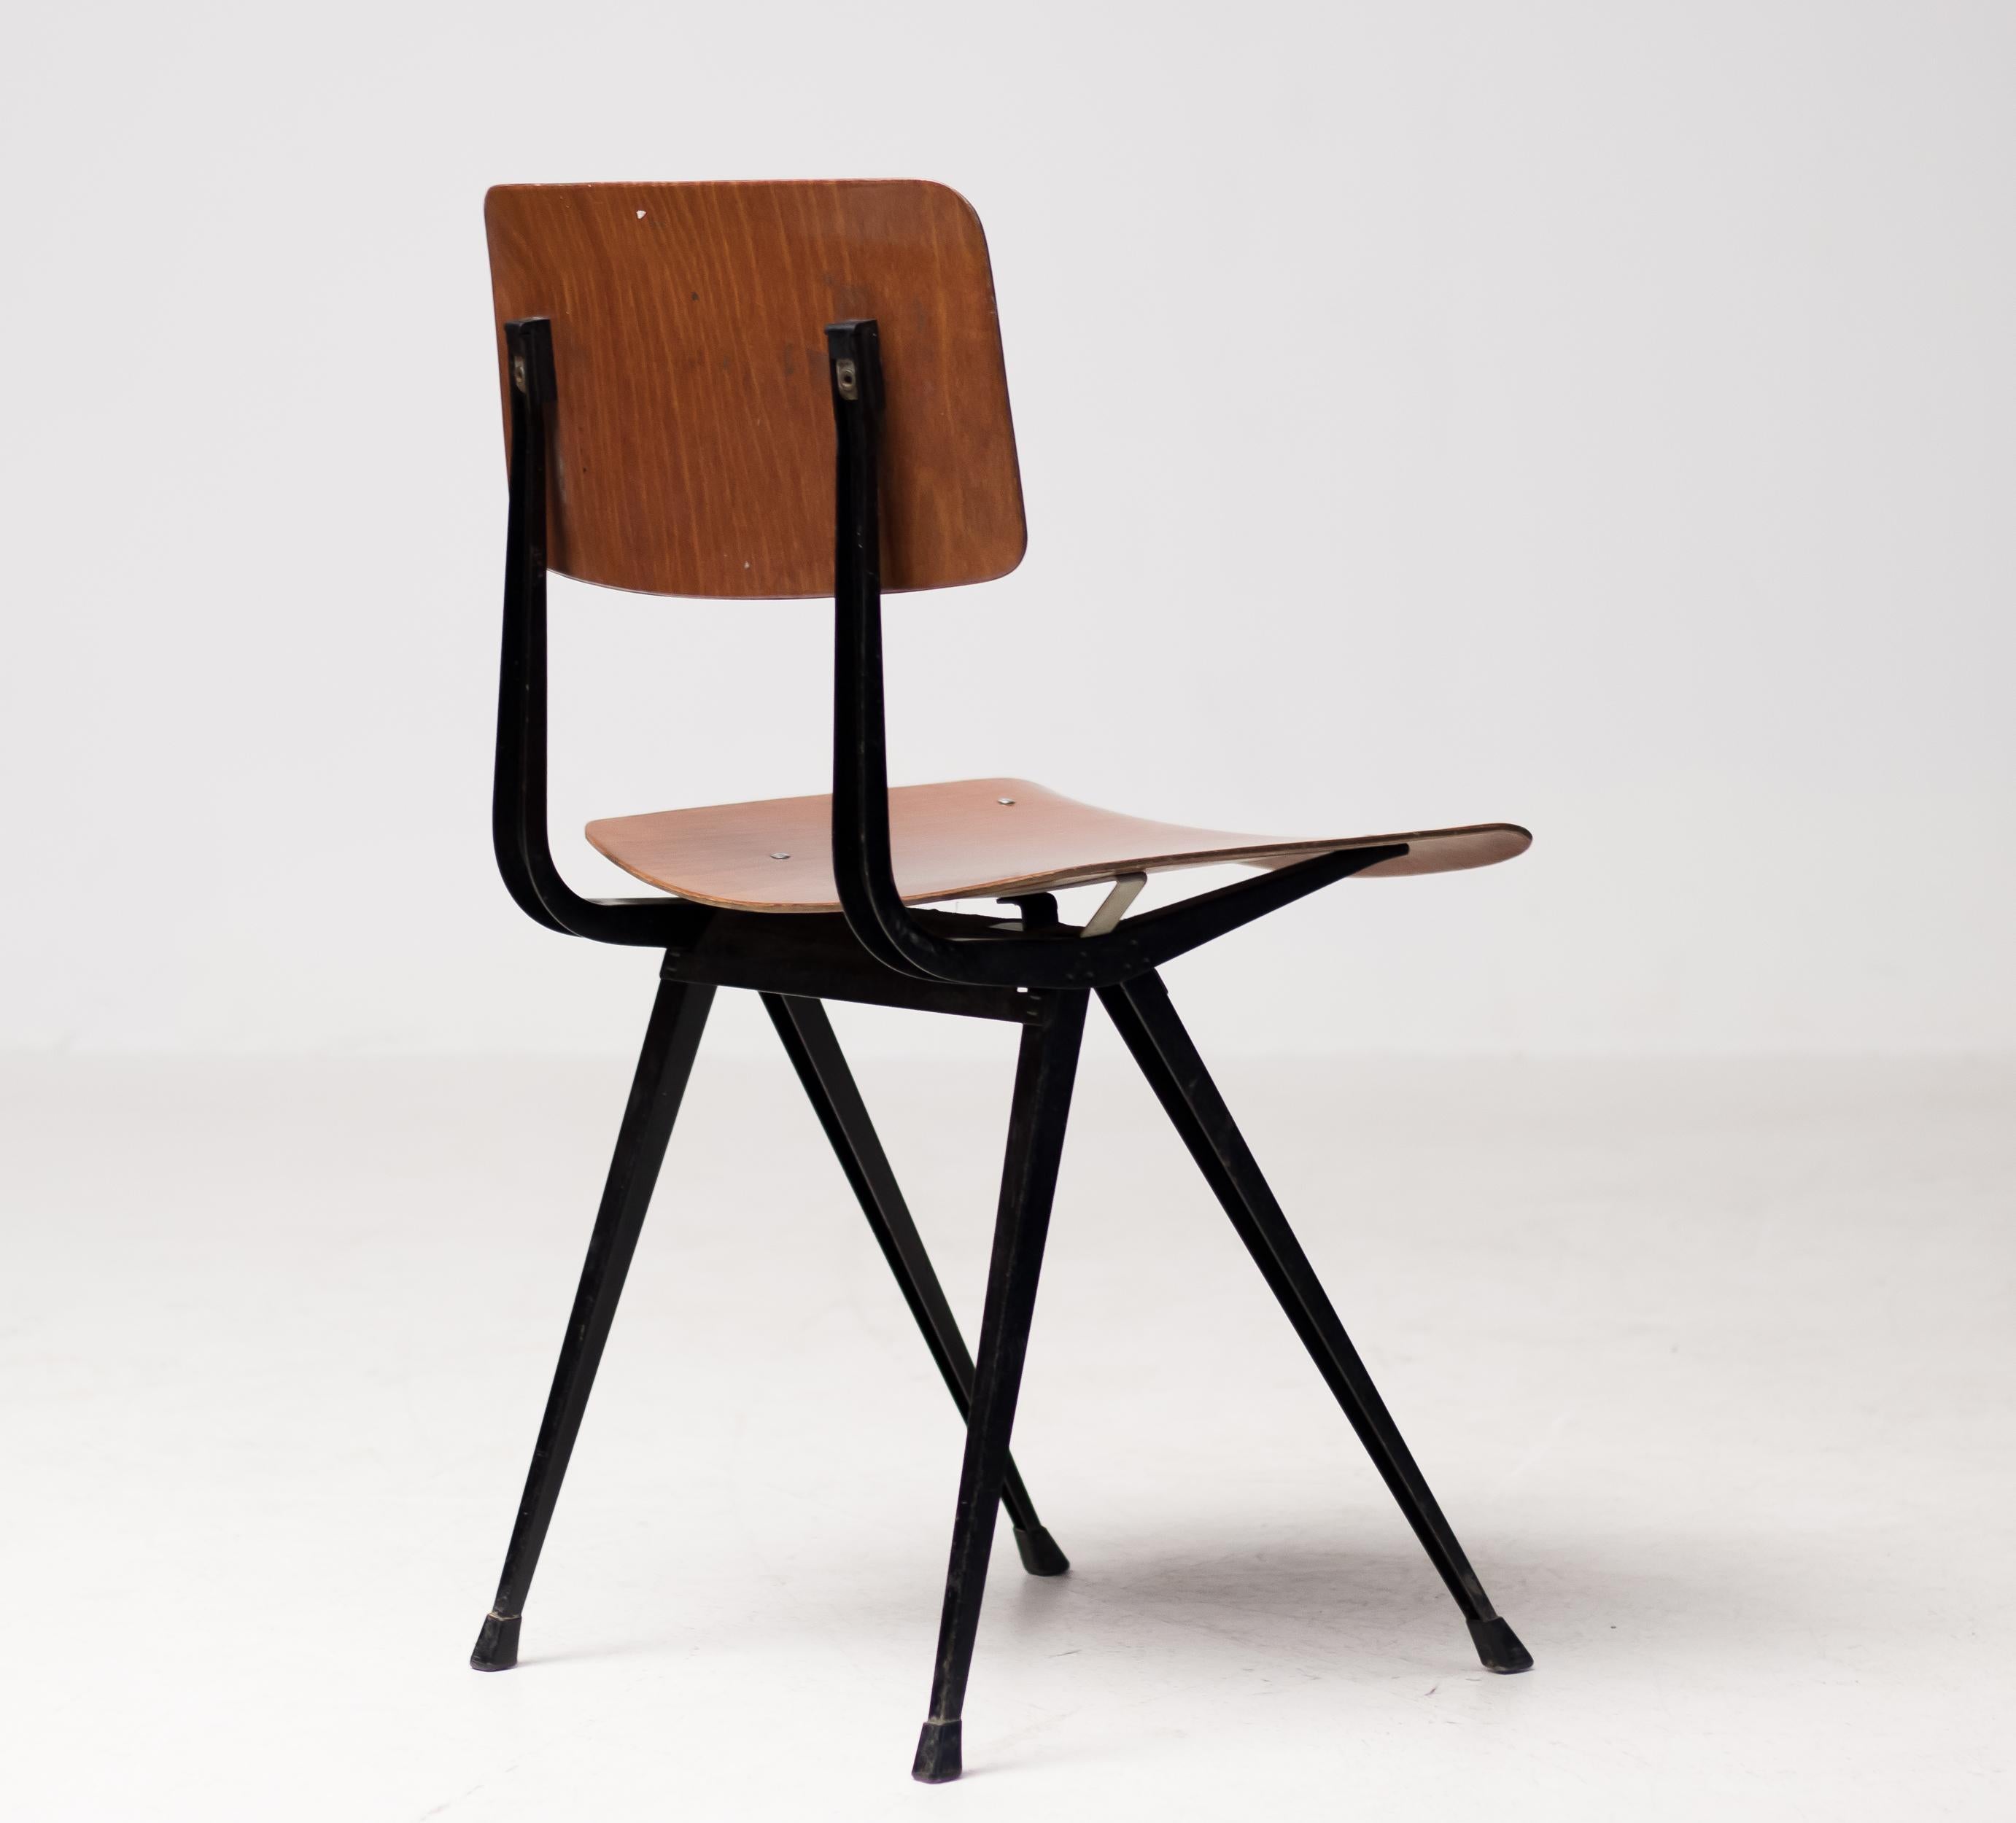 Set of twelve Result chairs, designed by Friso Kramer for Ahrend-De Cirkel in 1952.
Innovative black bent sheet steel frame with pressed wood seat and back.
Embossed logo.